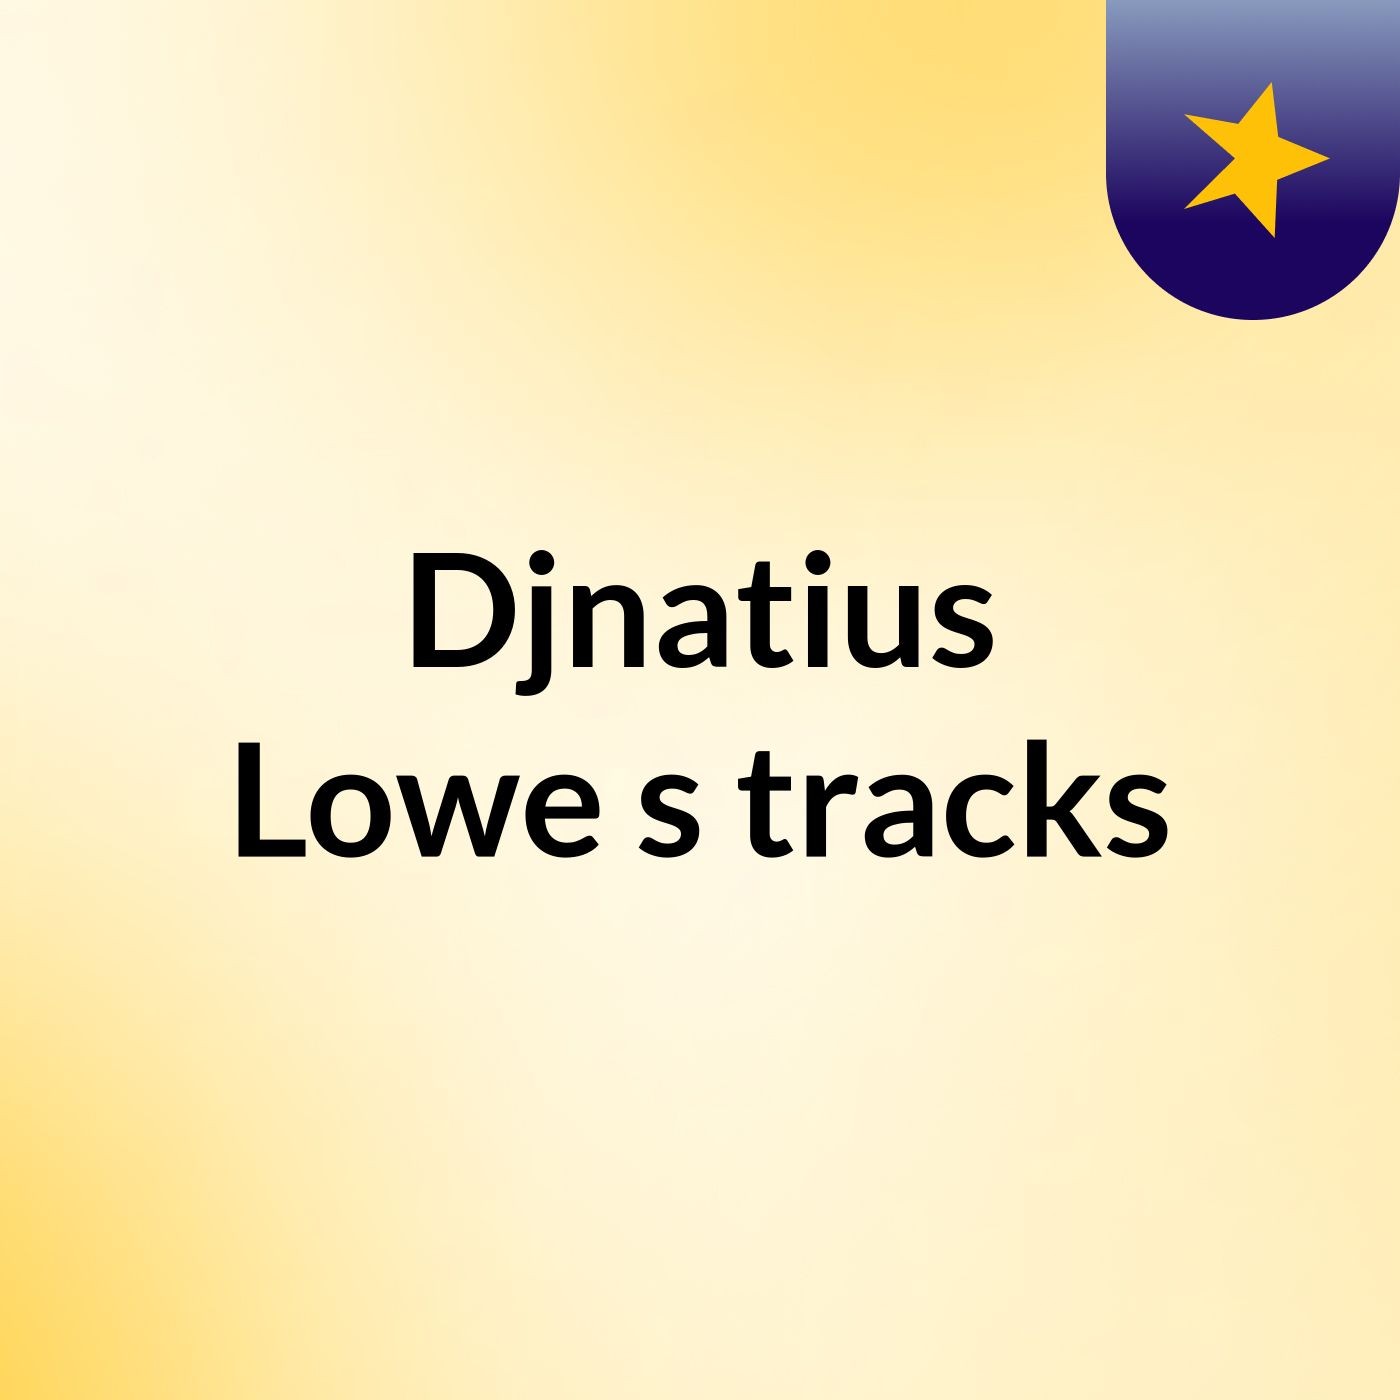 Djnatius Lowe's tracks